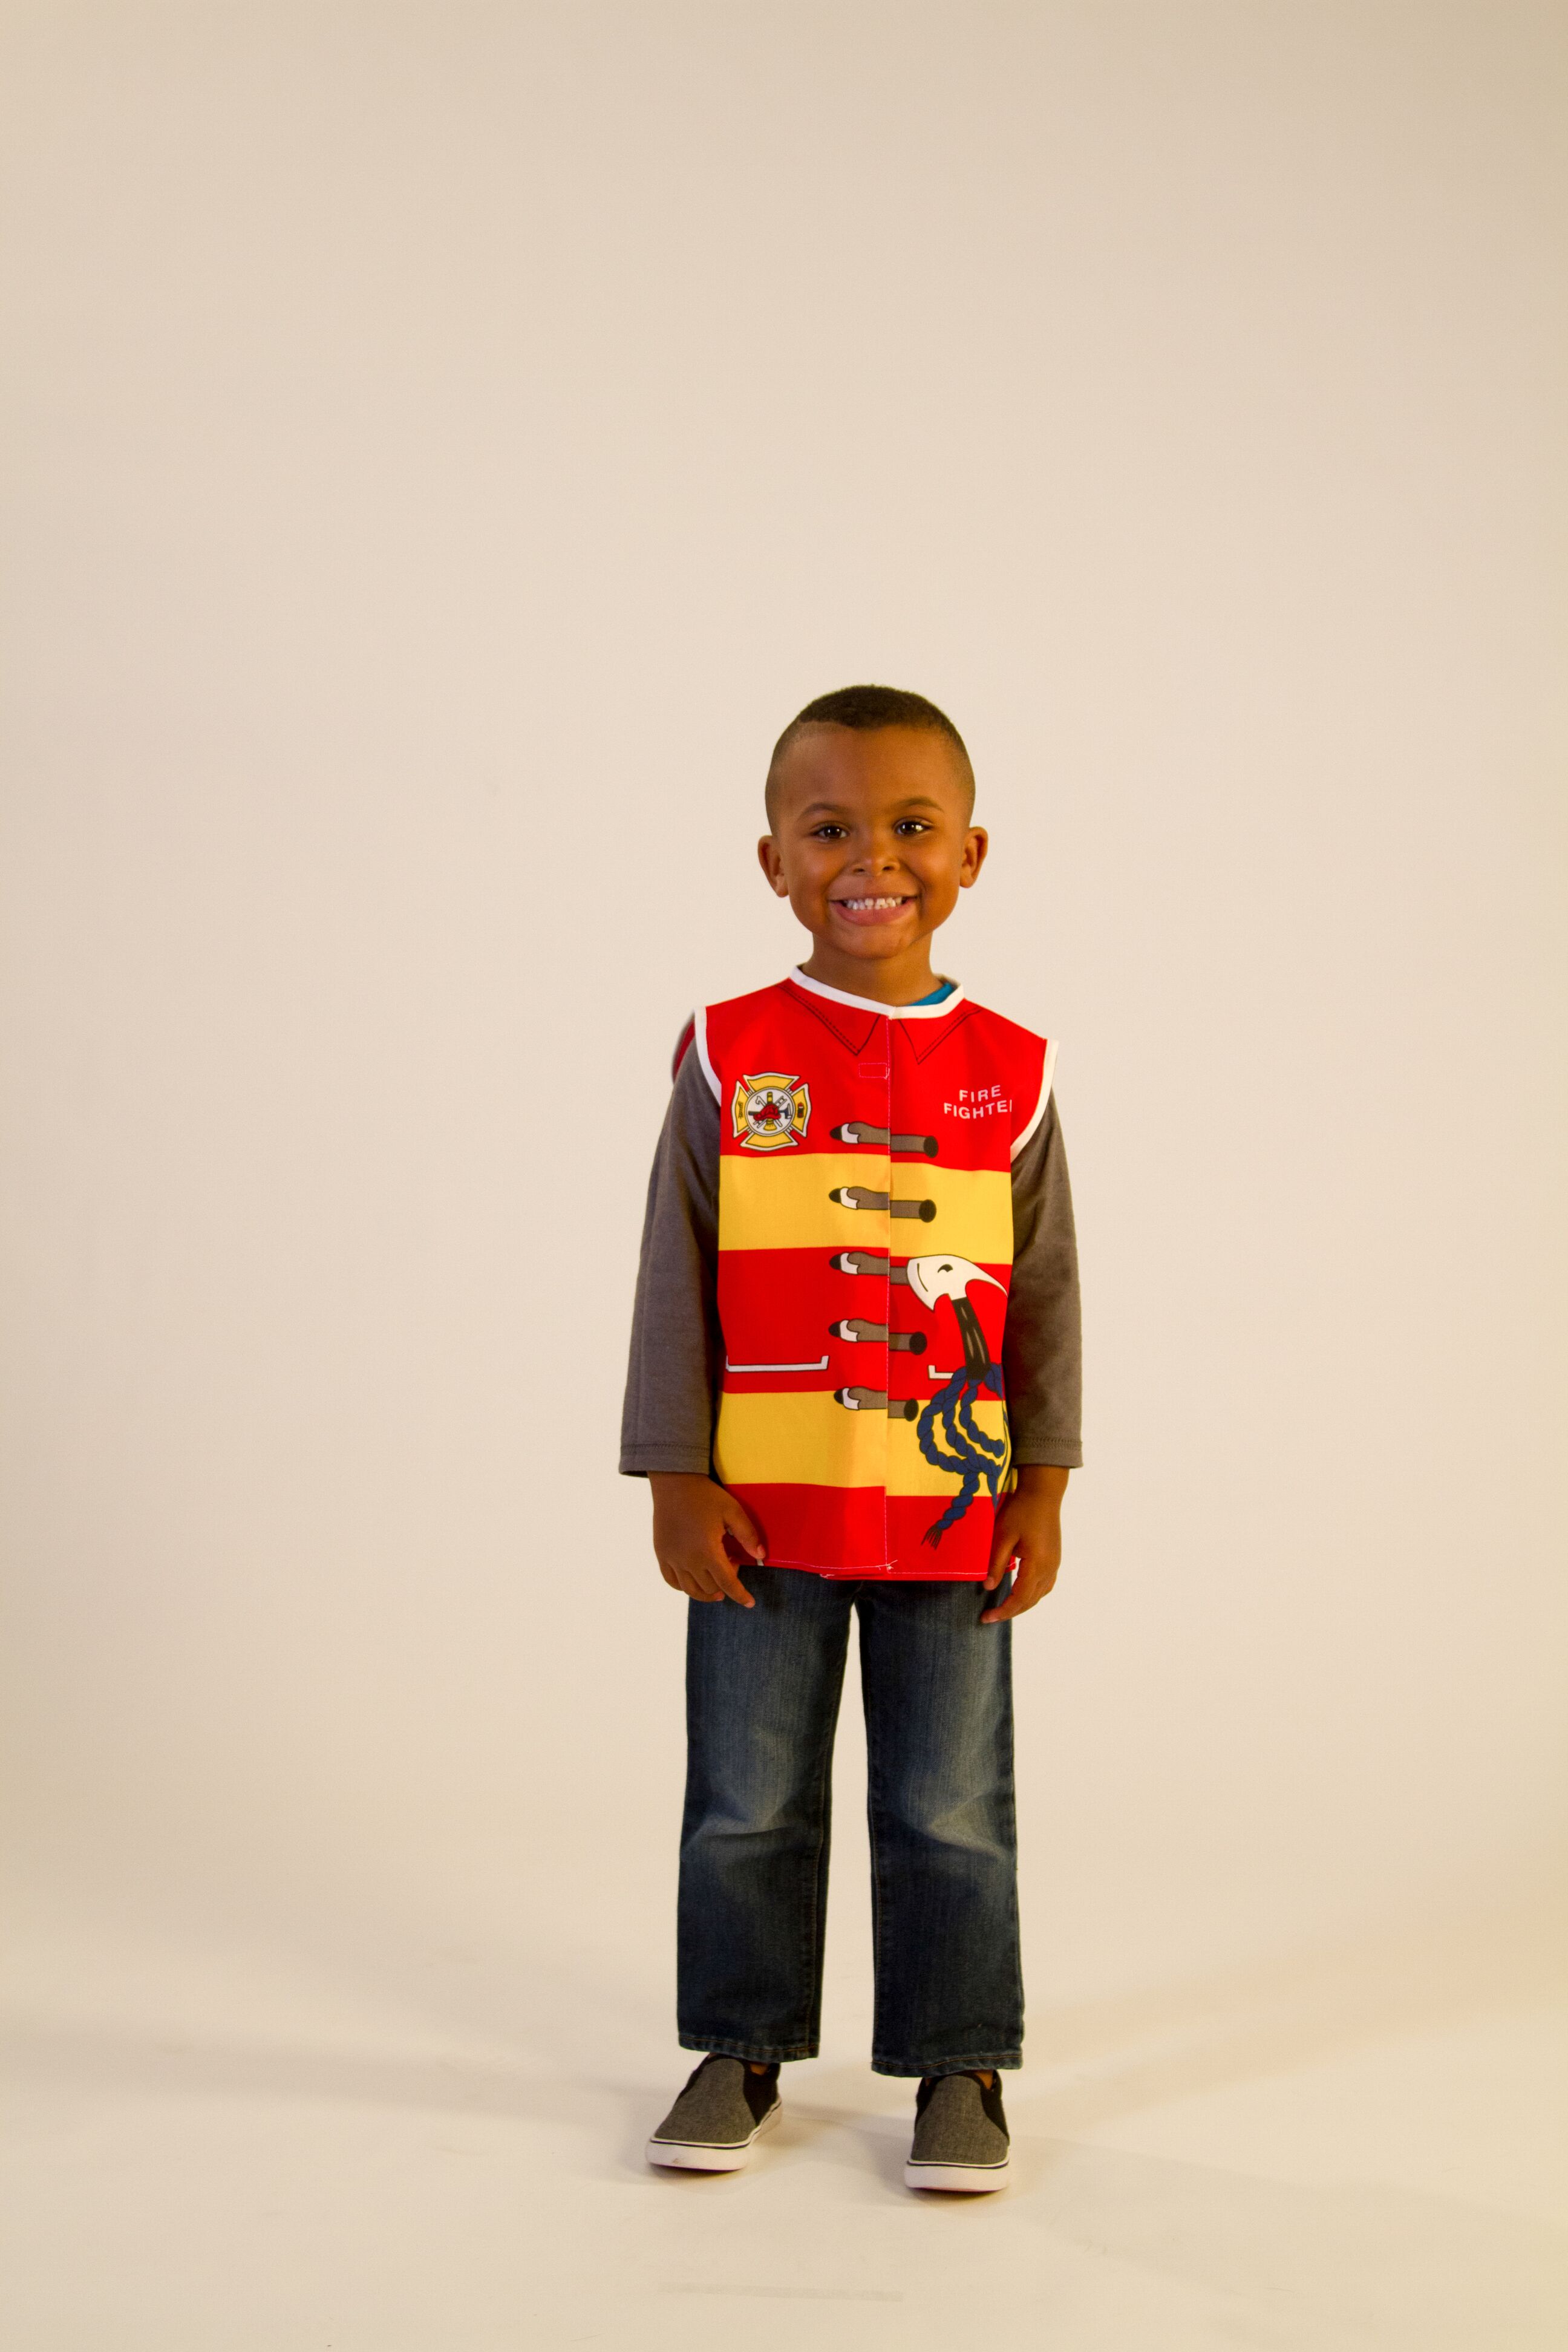 Dexter Educational Play Dex205 Toddler Firefighter Dress Up Costume